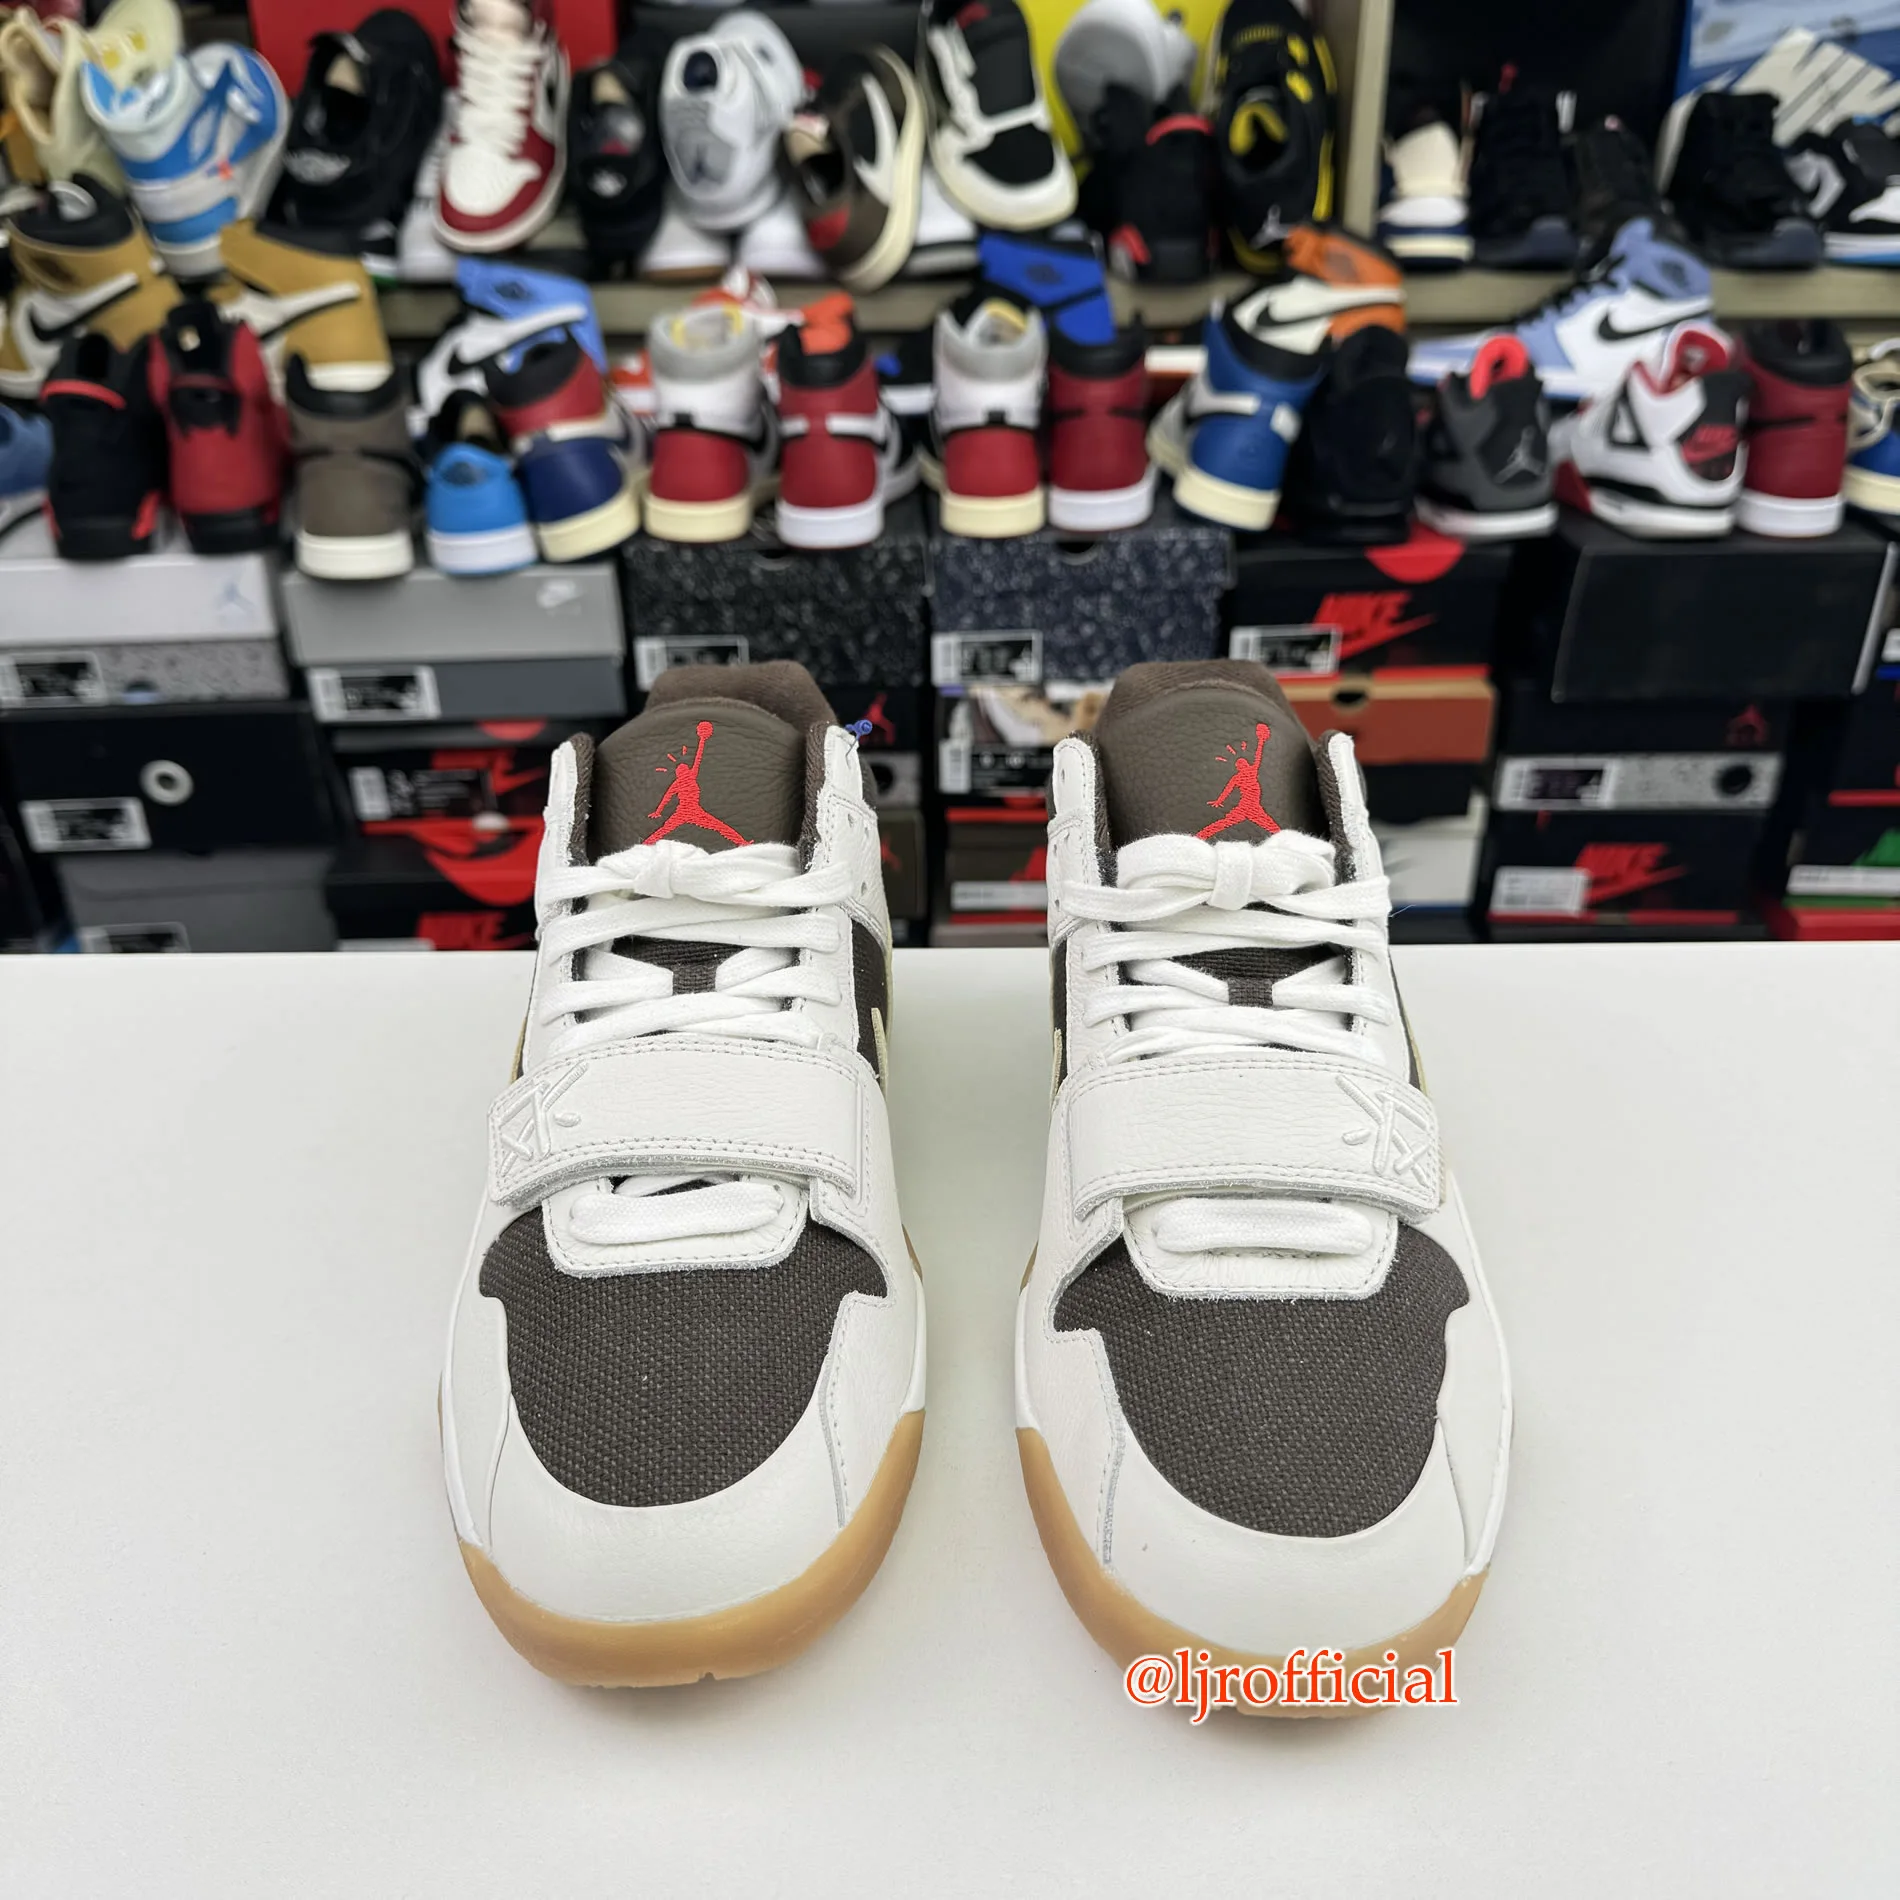 Travis Scott X Jordan Cut The Check Trainer Release Date Ljr Batch Sneakers (9) - www.ljrofficial.com